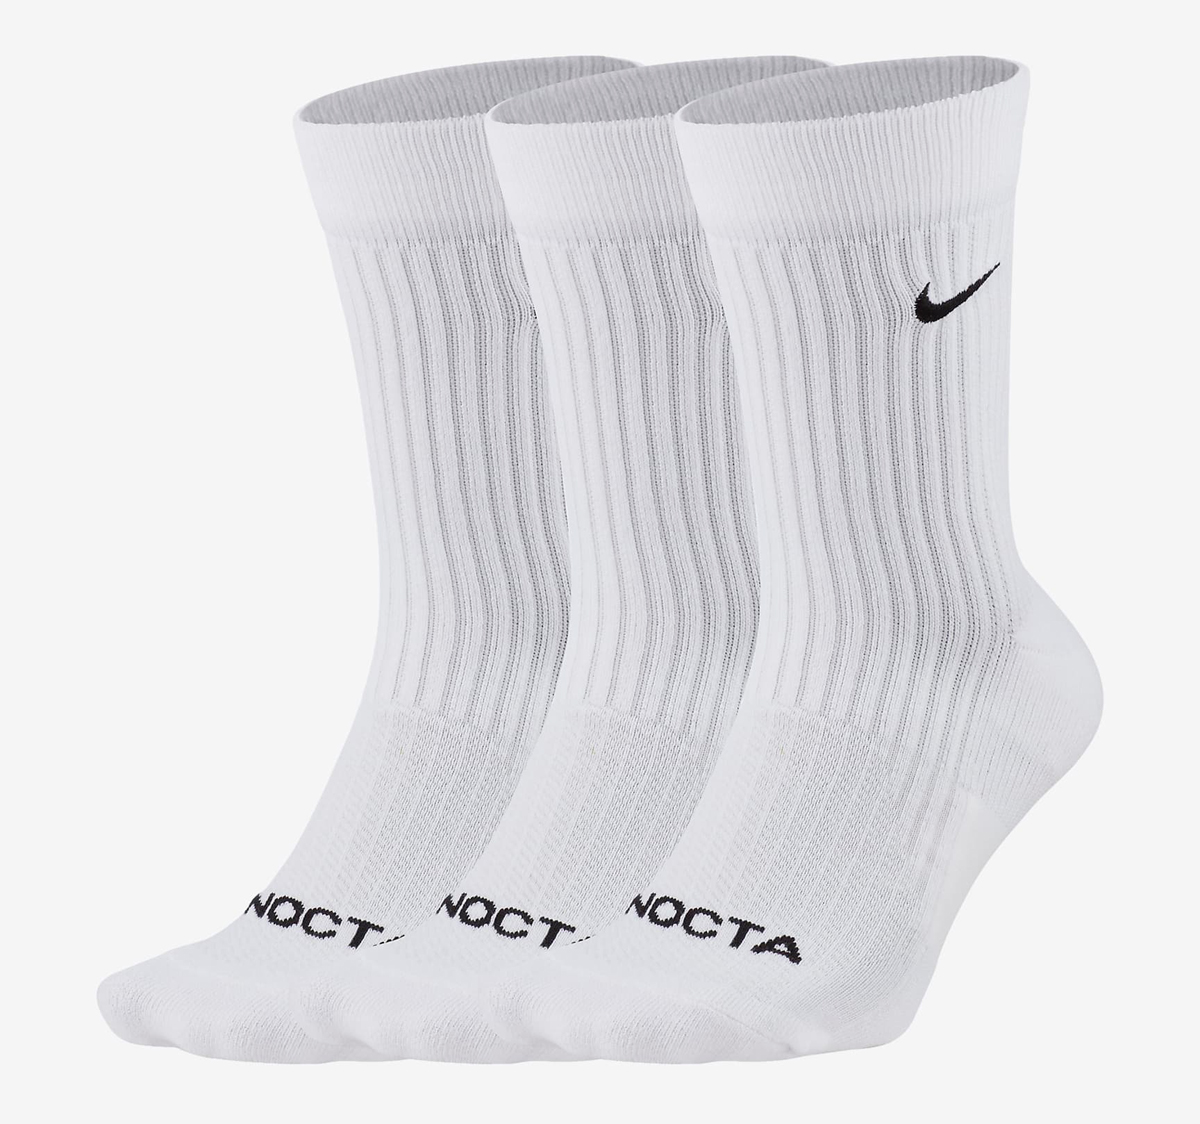 Drake-NOCTA-Nike-Socks-1